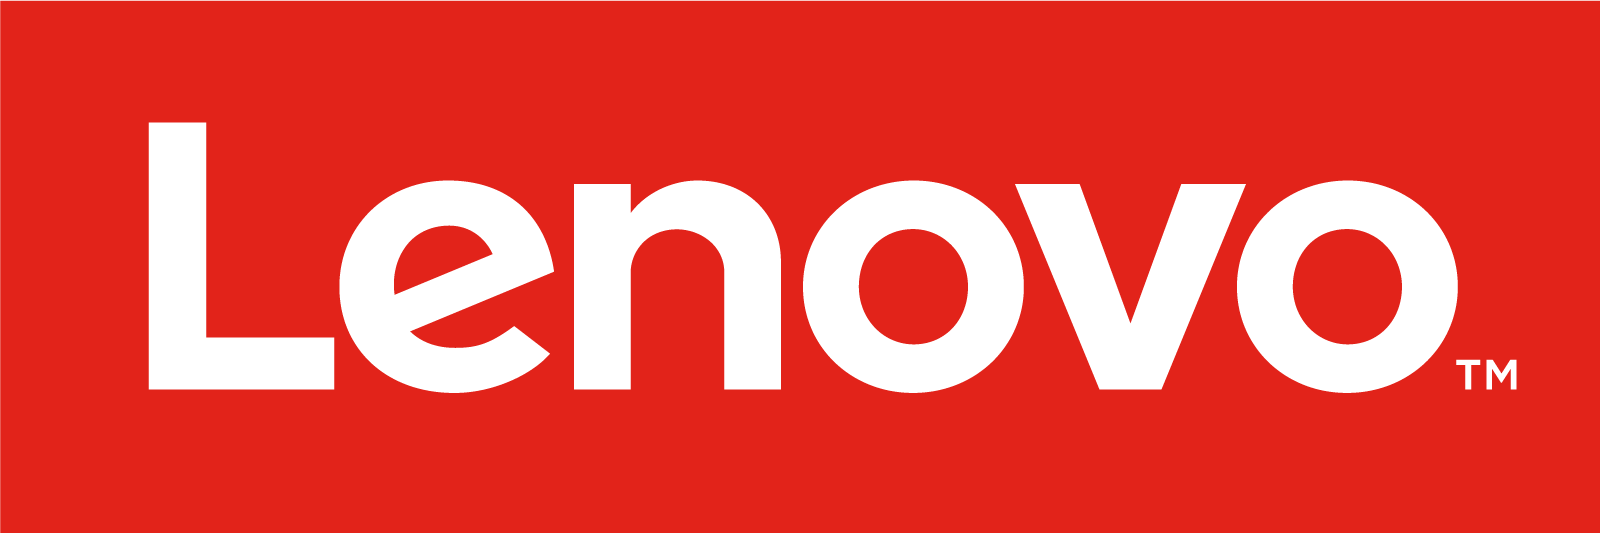 Lenovo Authorized Reseller Partner - RJO Ventures Inc